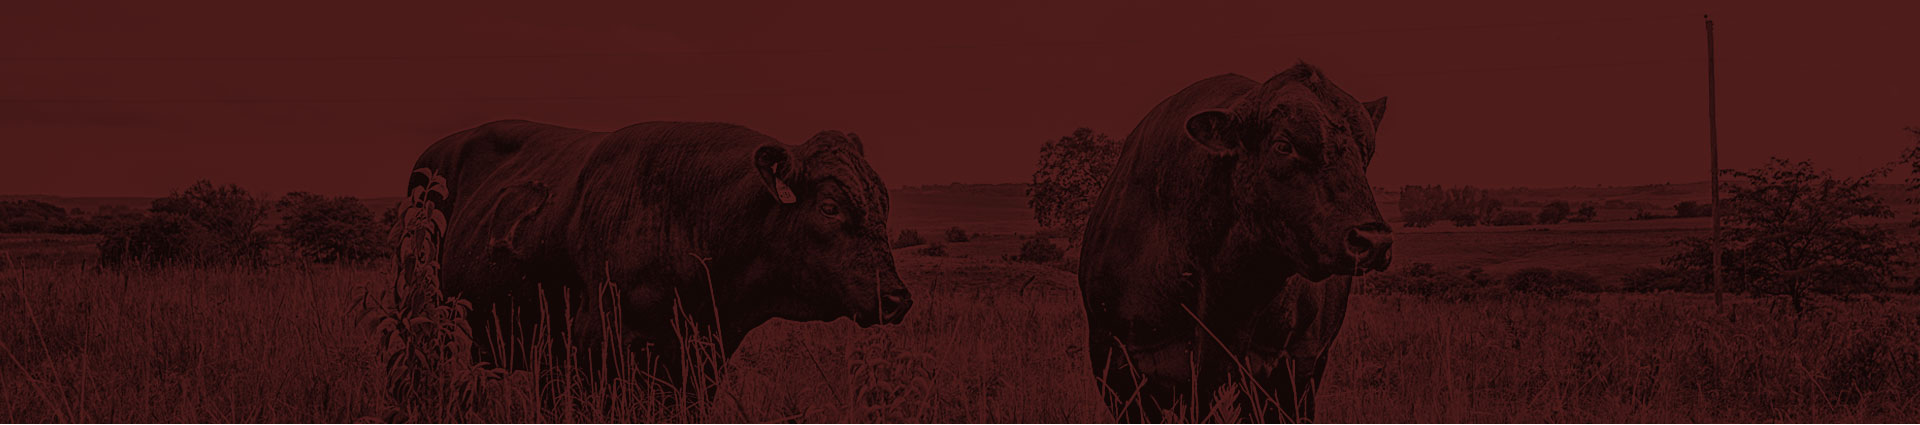 Two SimAngus bulls in a field